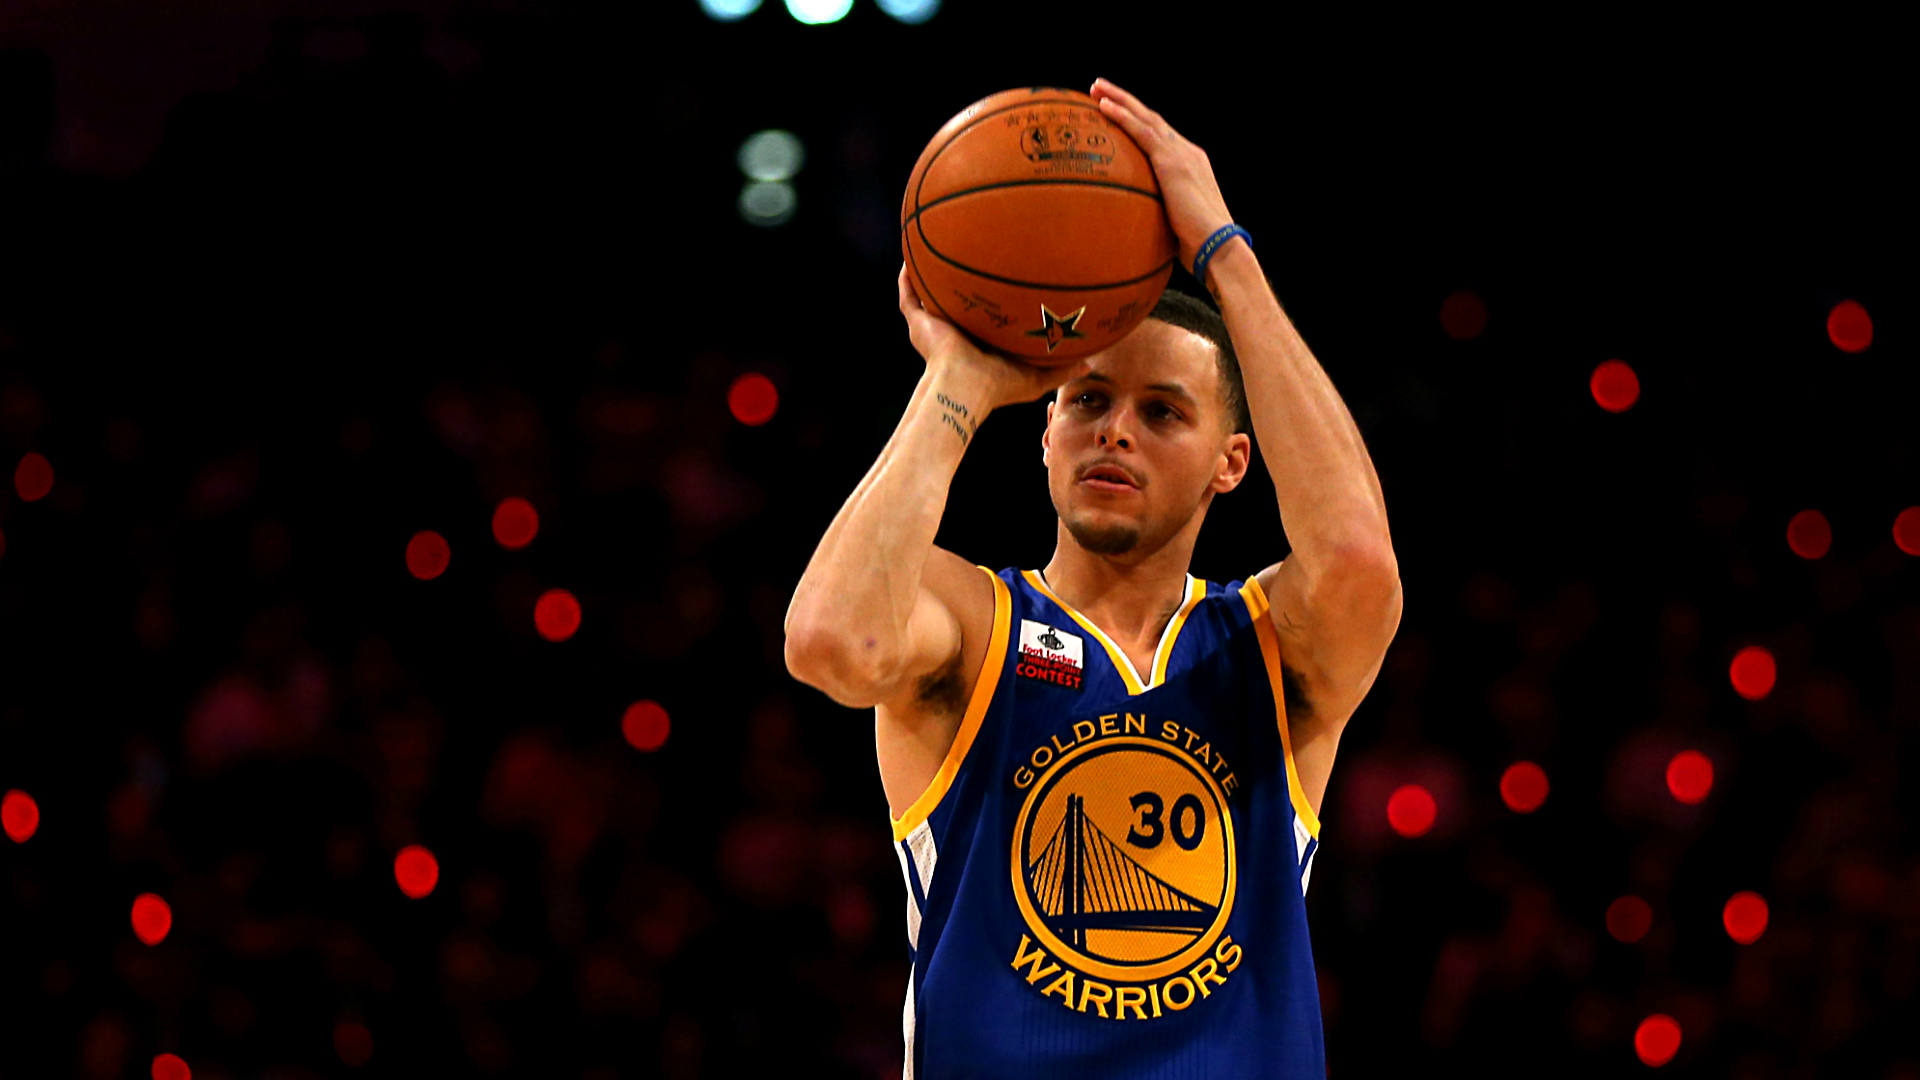 NBA Wallpaper Stephen Curry - WallpaperSafari